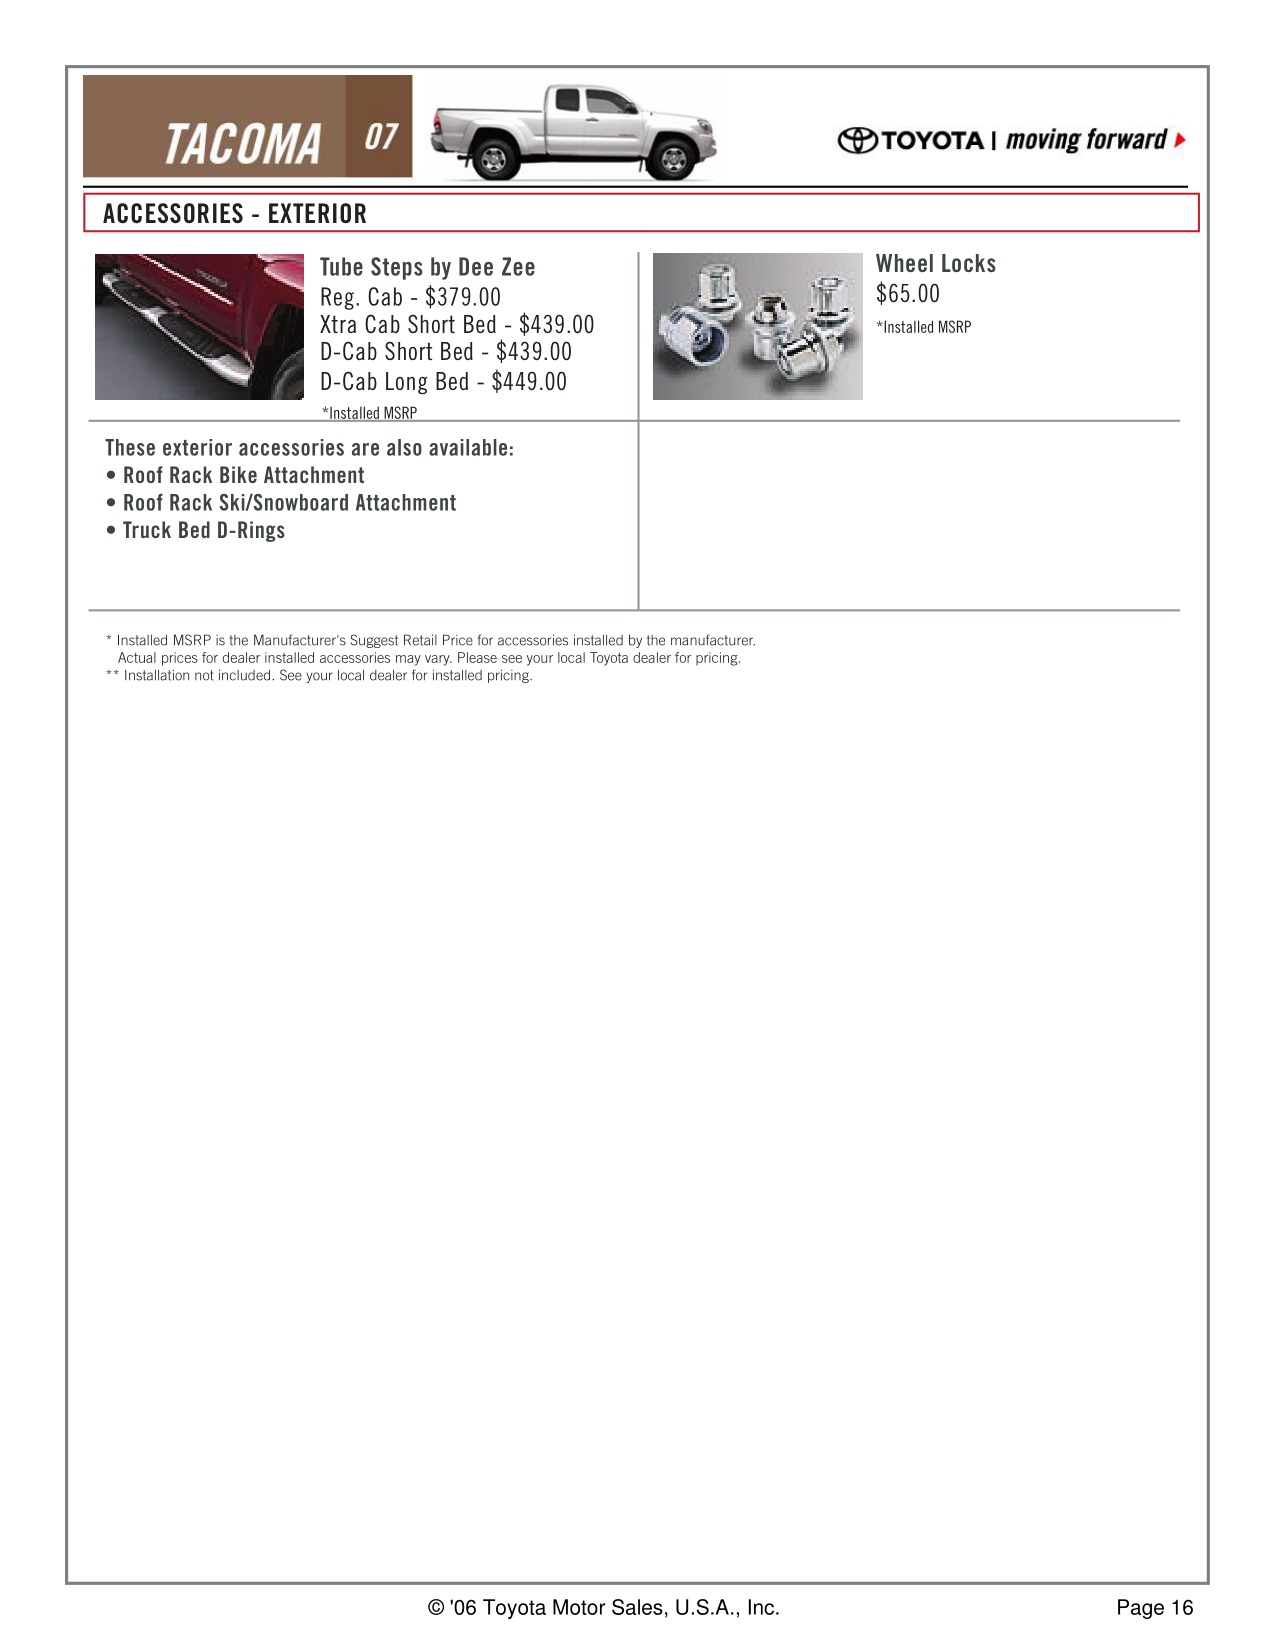 2007 Toyota Tacoma 4x2 Brochure Page 3